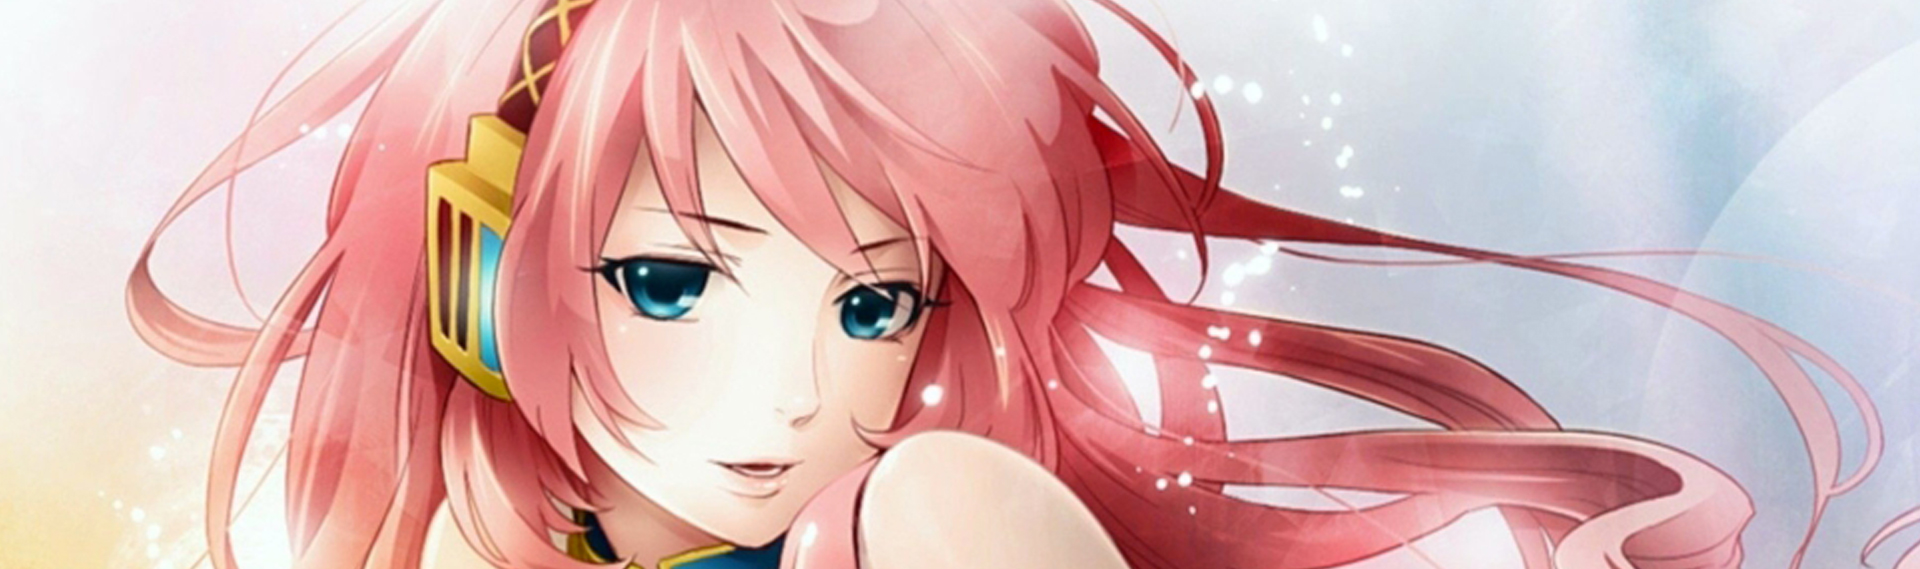 Personnage de manga futuriste cheveux longs rose